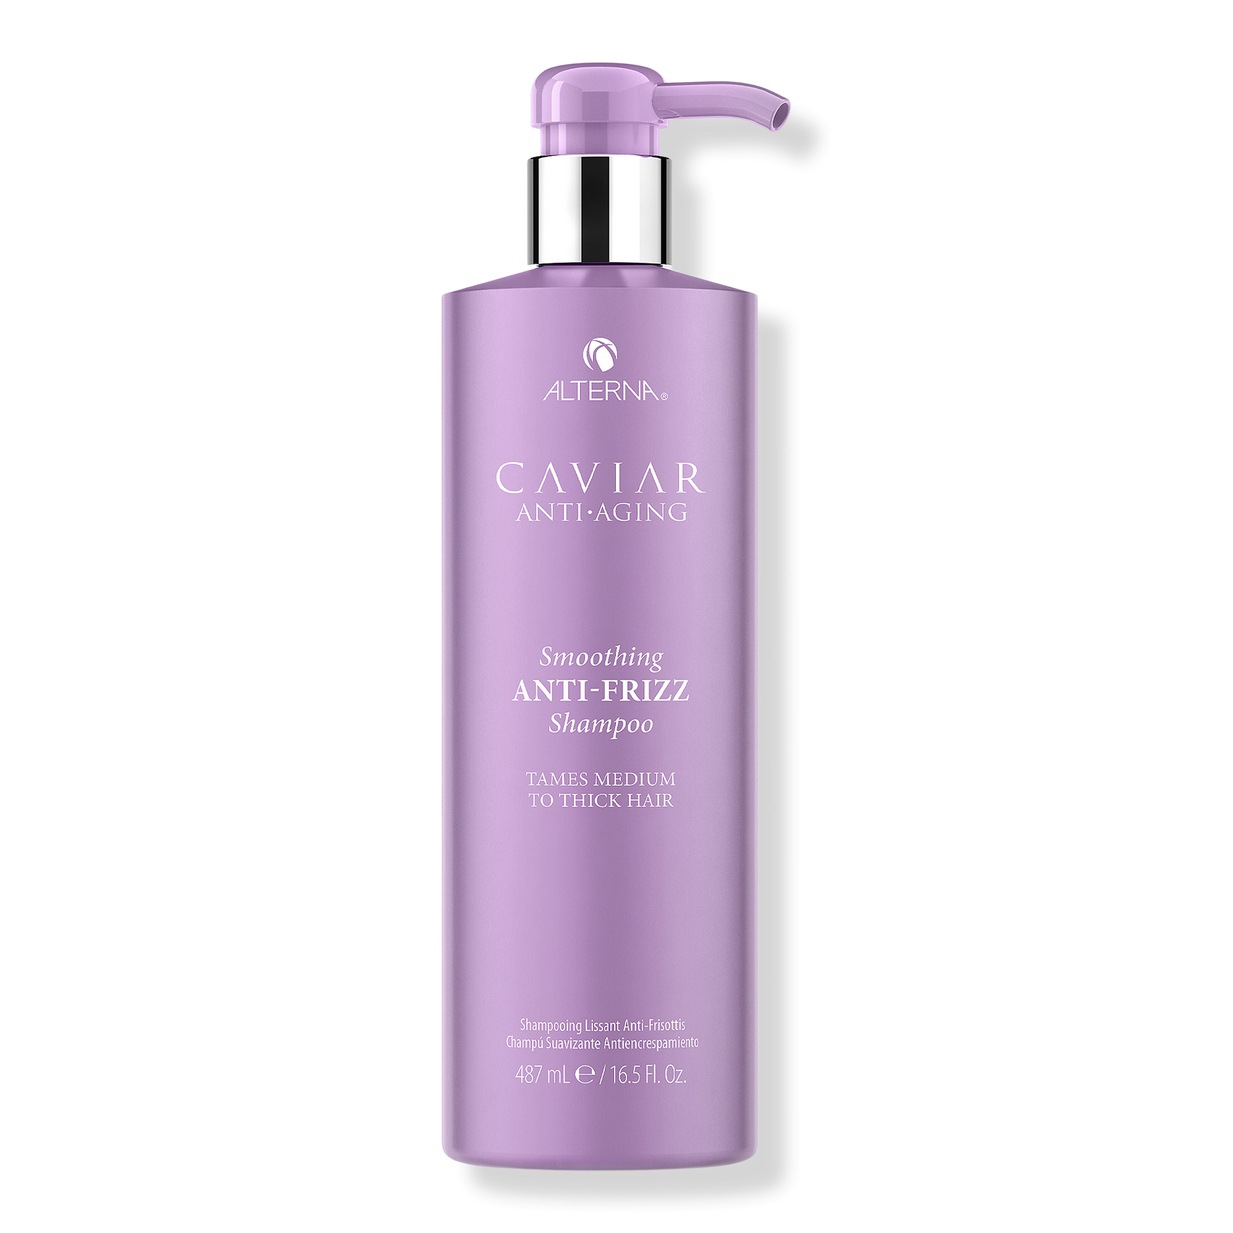 Caviar Anti-Aging Smoothing Anti-Frizz Shampoo - Alterna Ulta Beauty